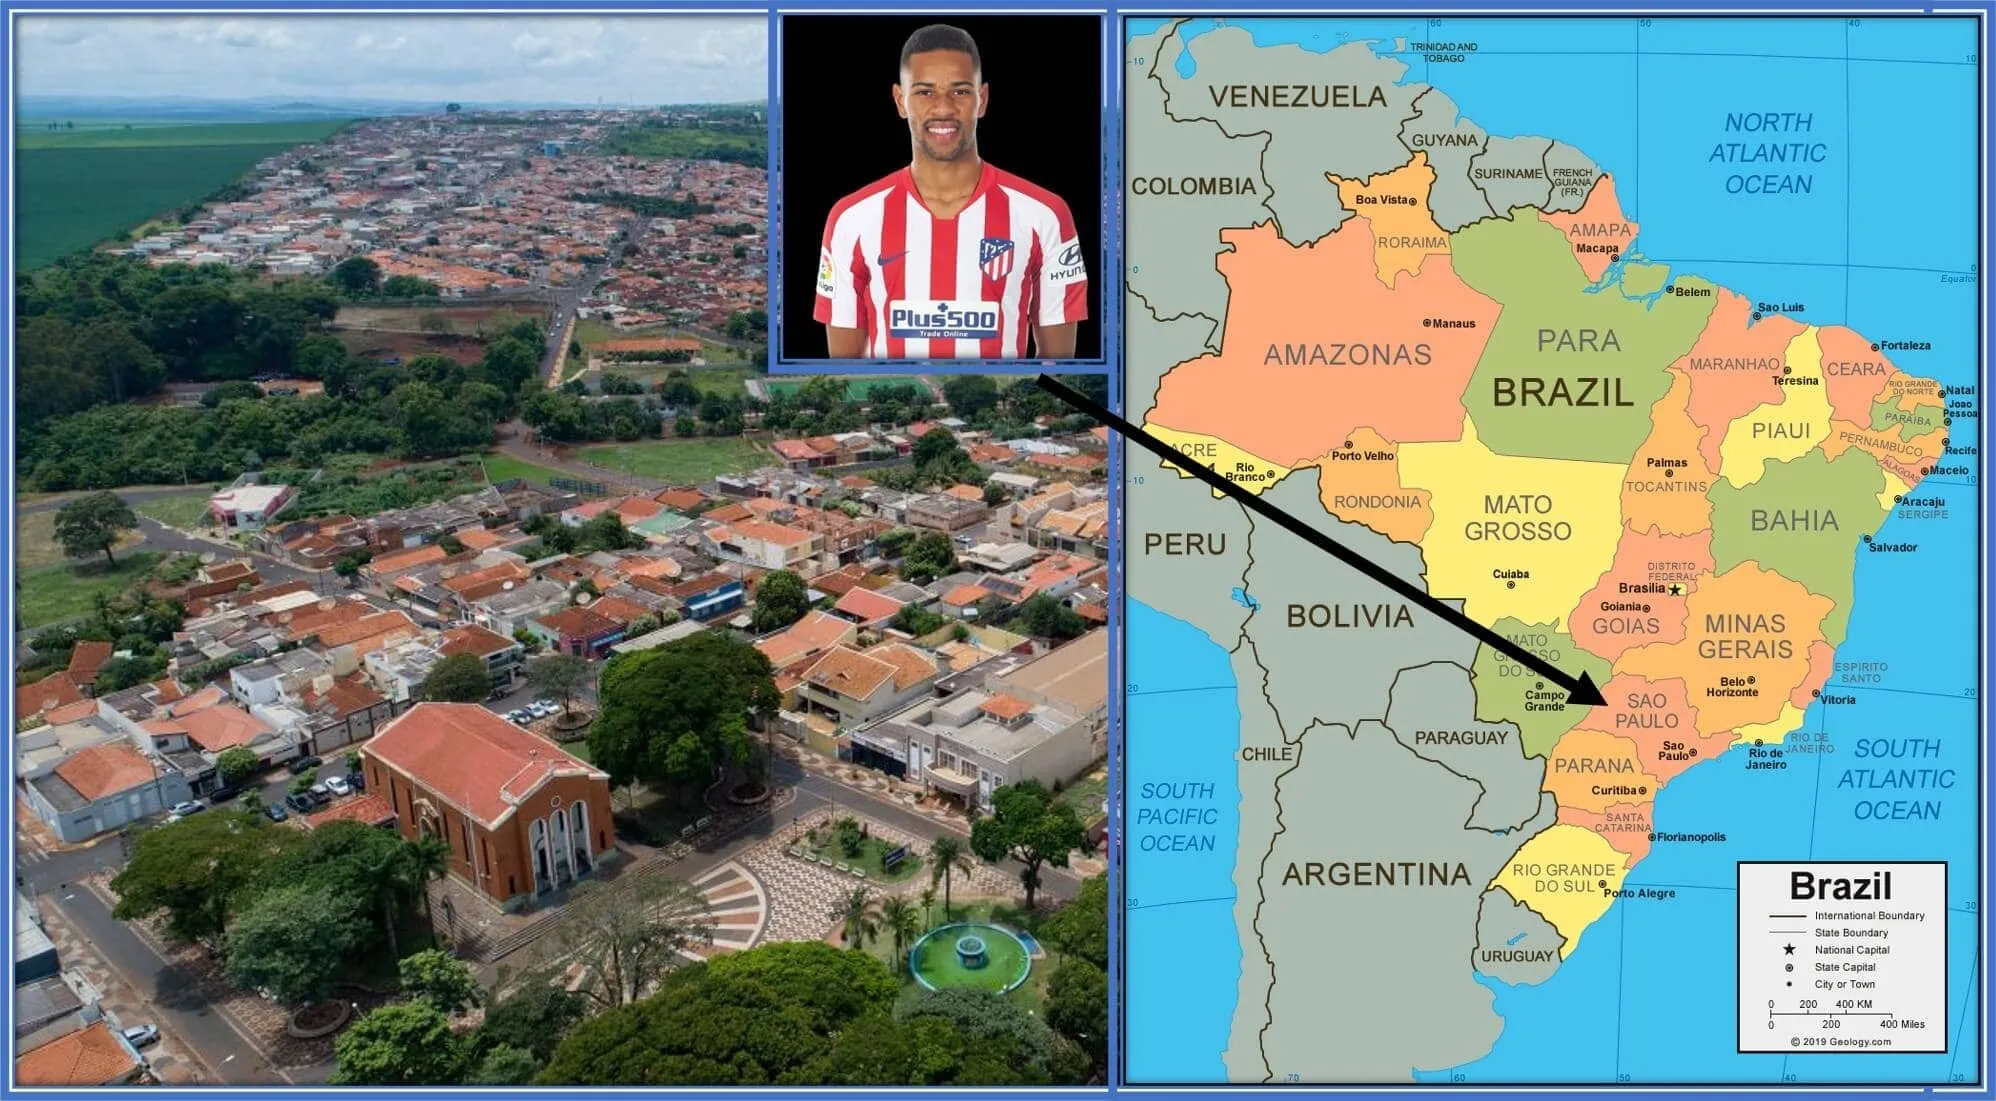 A glimpse of his hometown, Serrana (L) and his state of Origin, Sao Paulo (R).